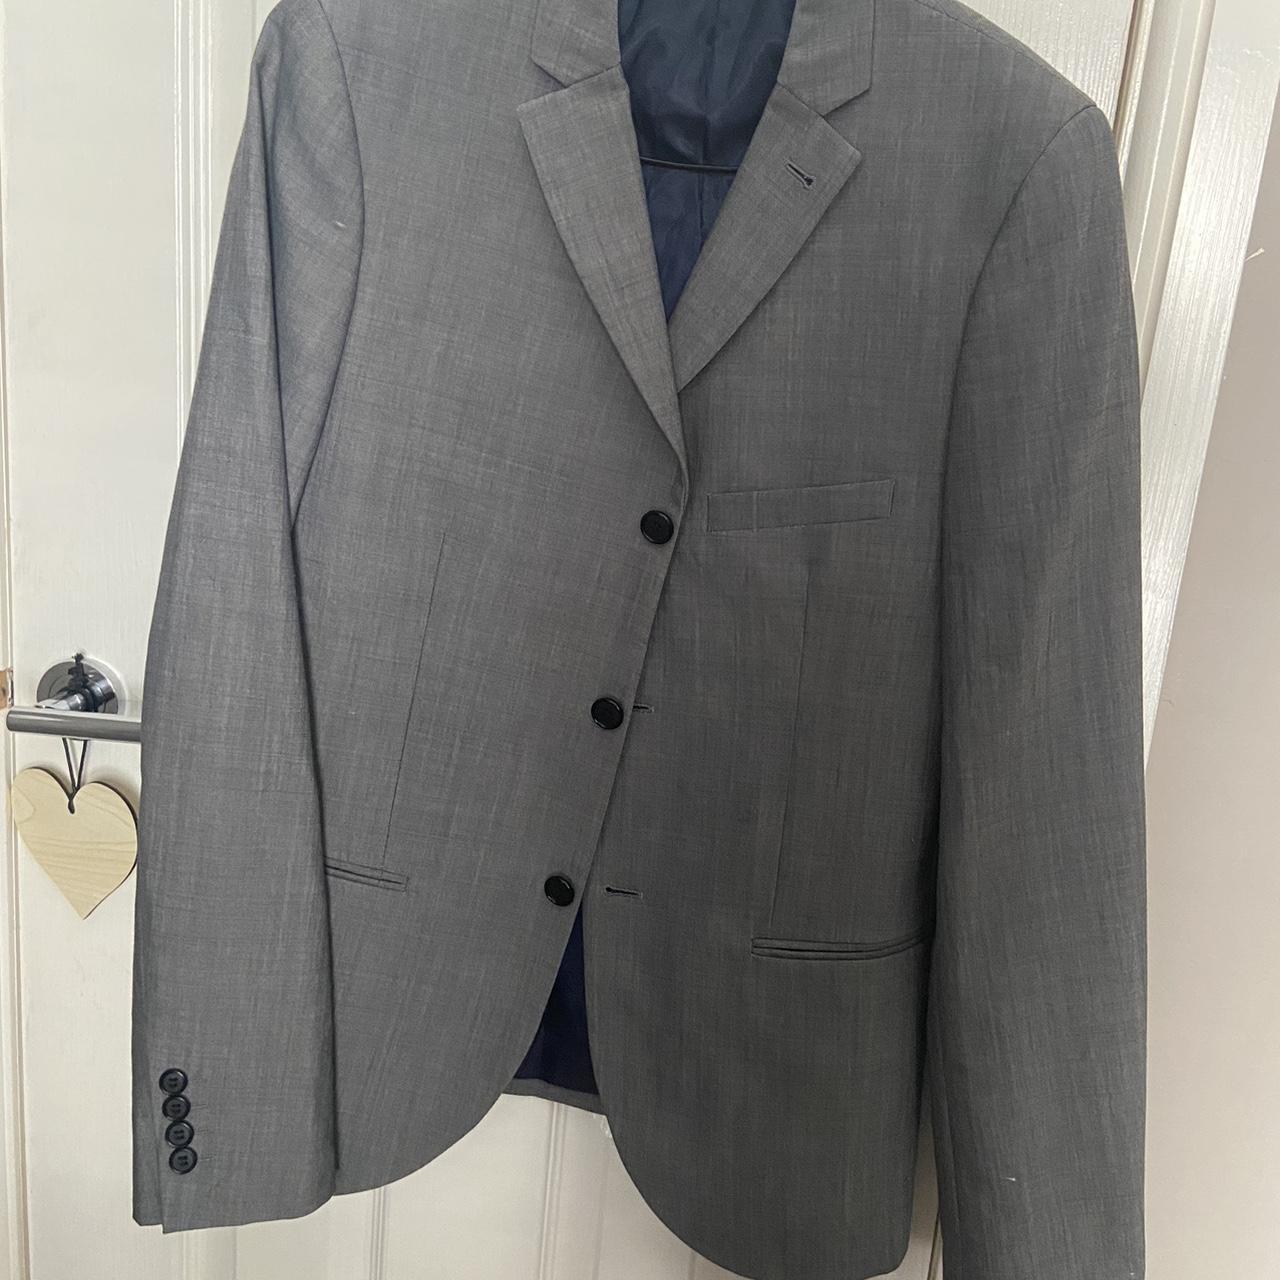 Grey Topman suit jacket - matching trousers... - Depop